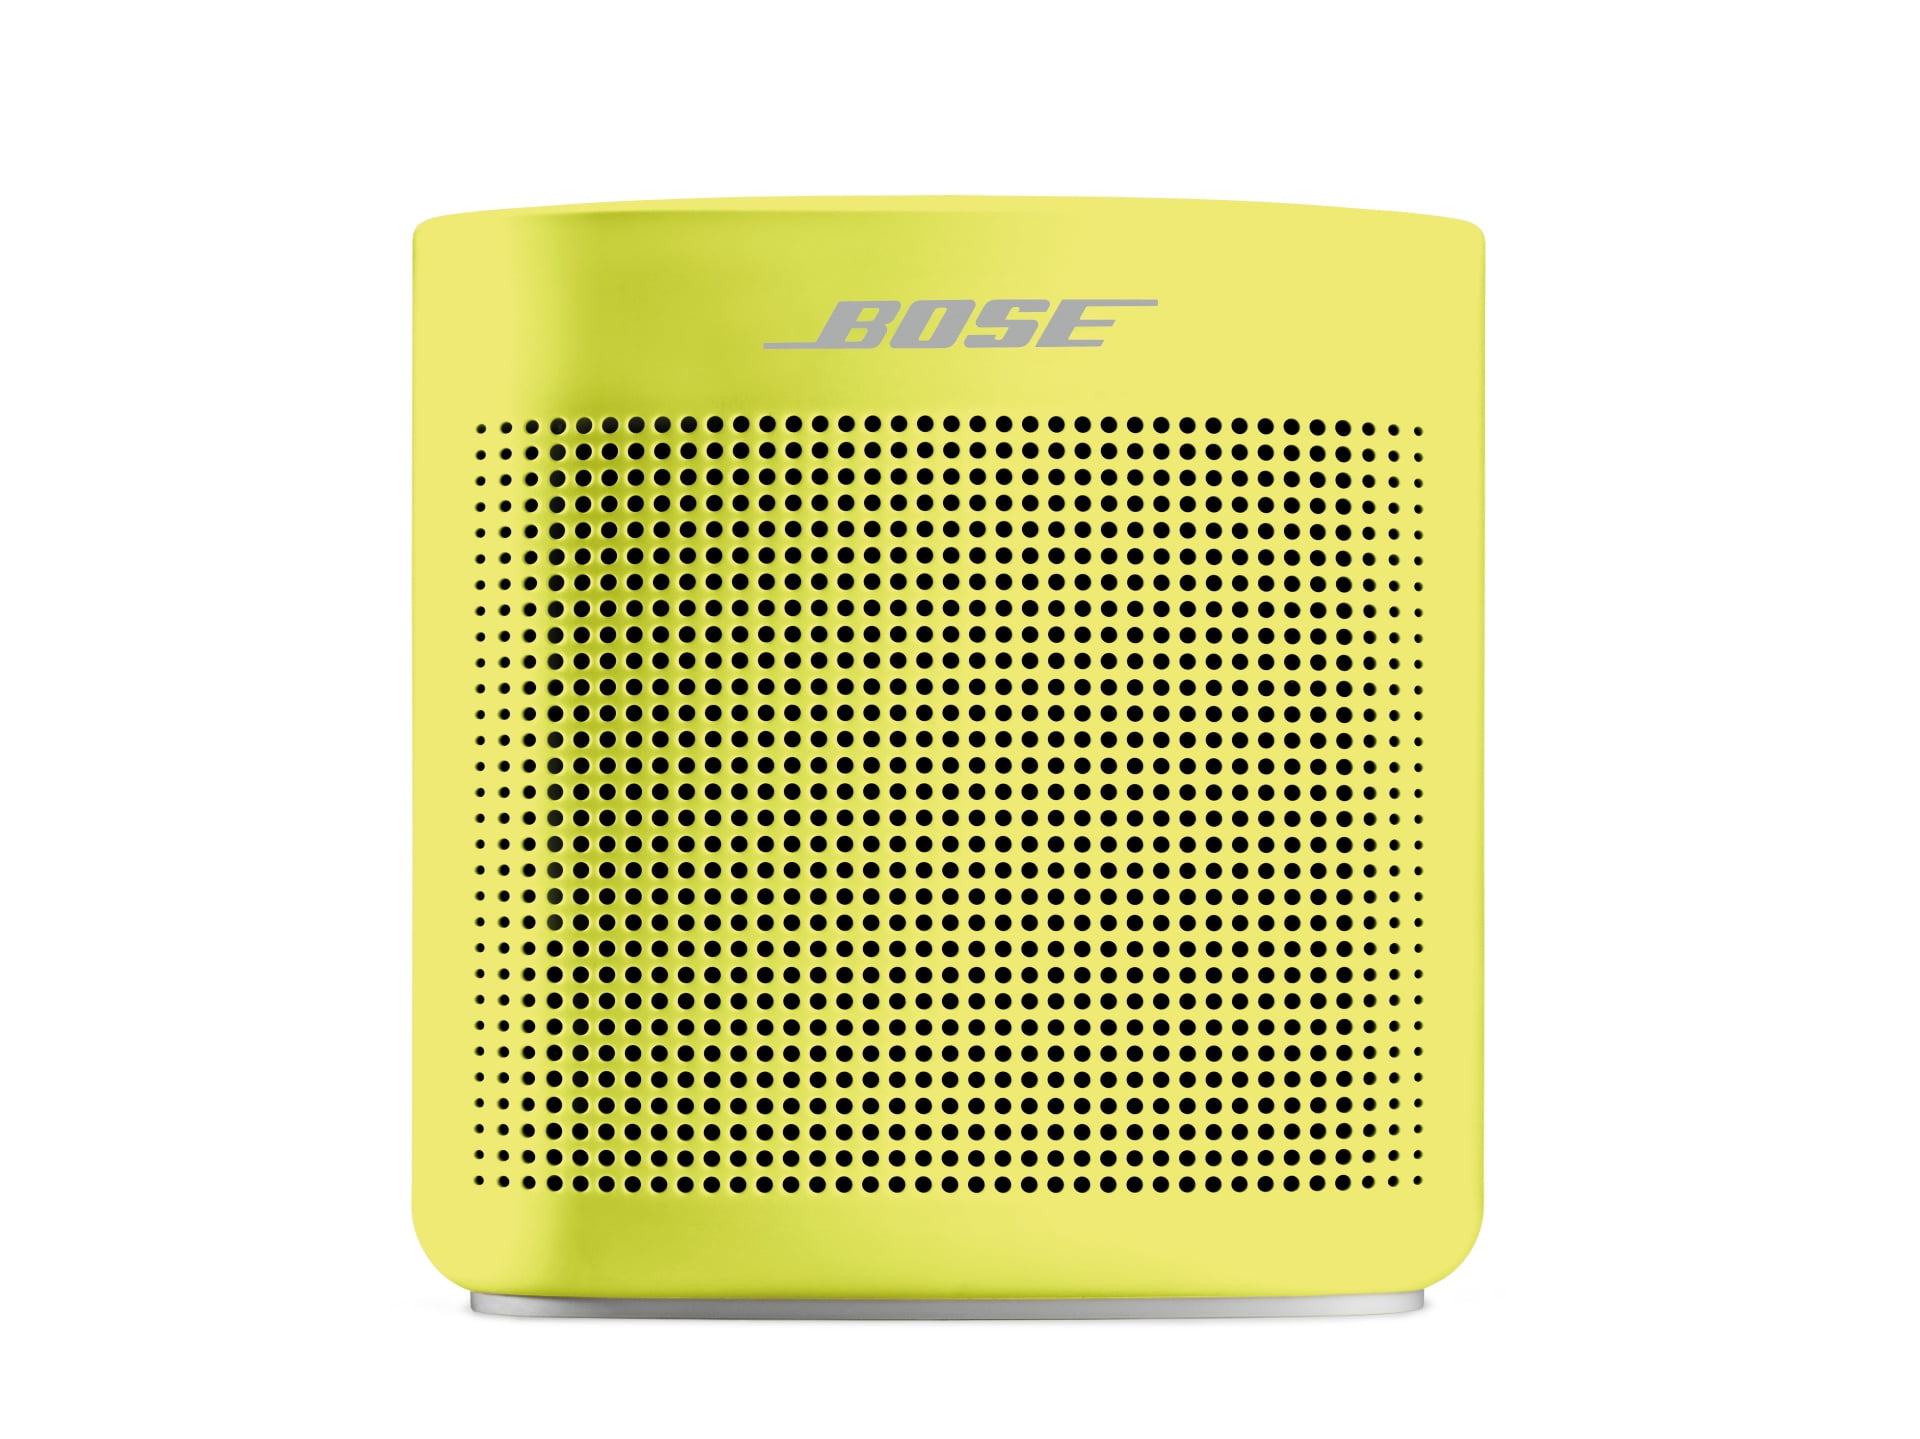 Bose SoundLink Portable Bluetooth Speaker, Yellow, 752195-0900